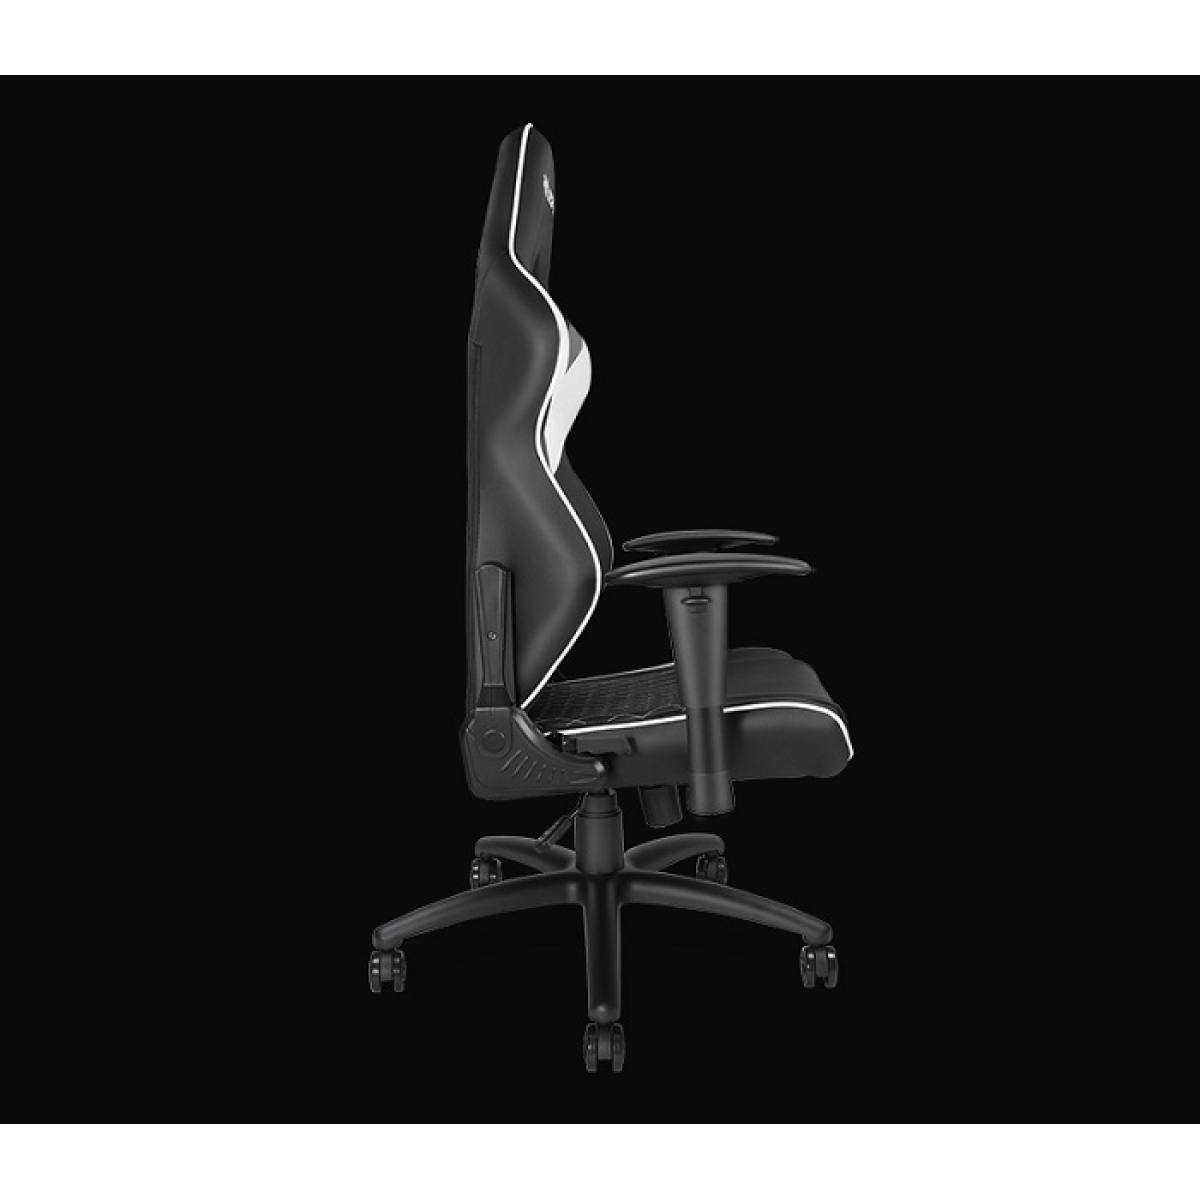 Ghế Anda Seat Assassin V2 Black/White/Gray